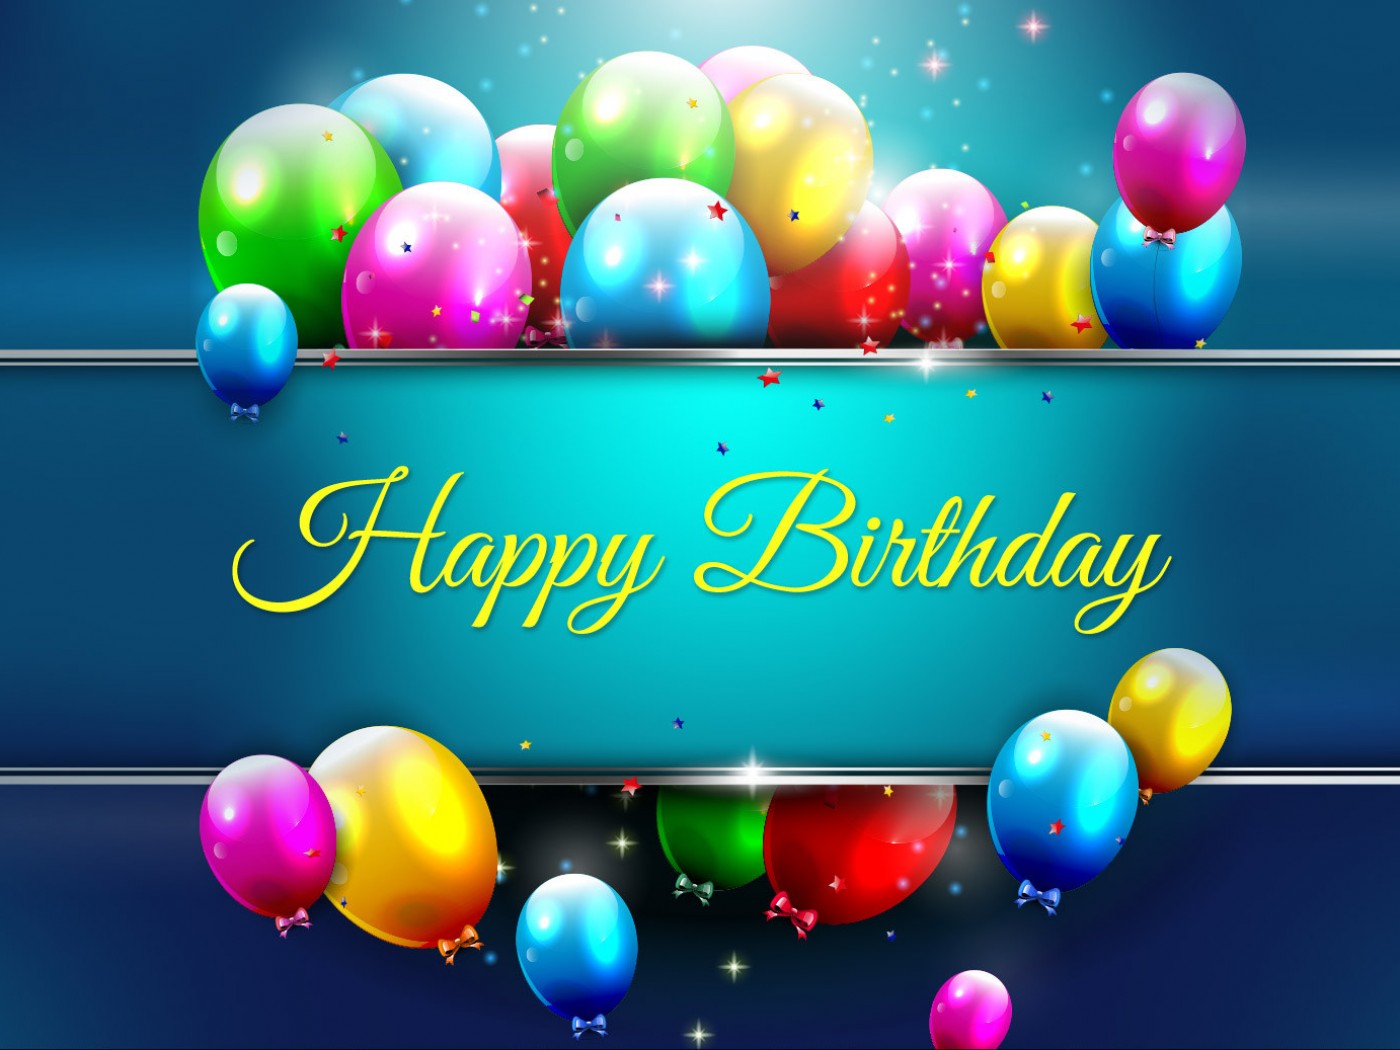 Happy Birthday Balloons Images - Desktop Backgrounds